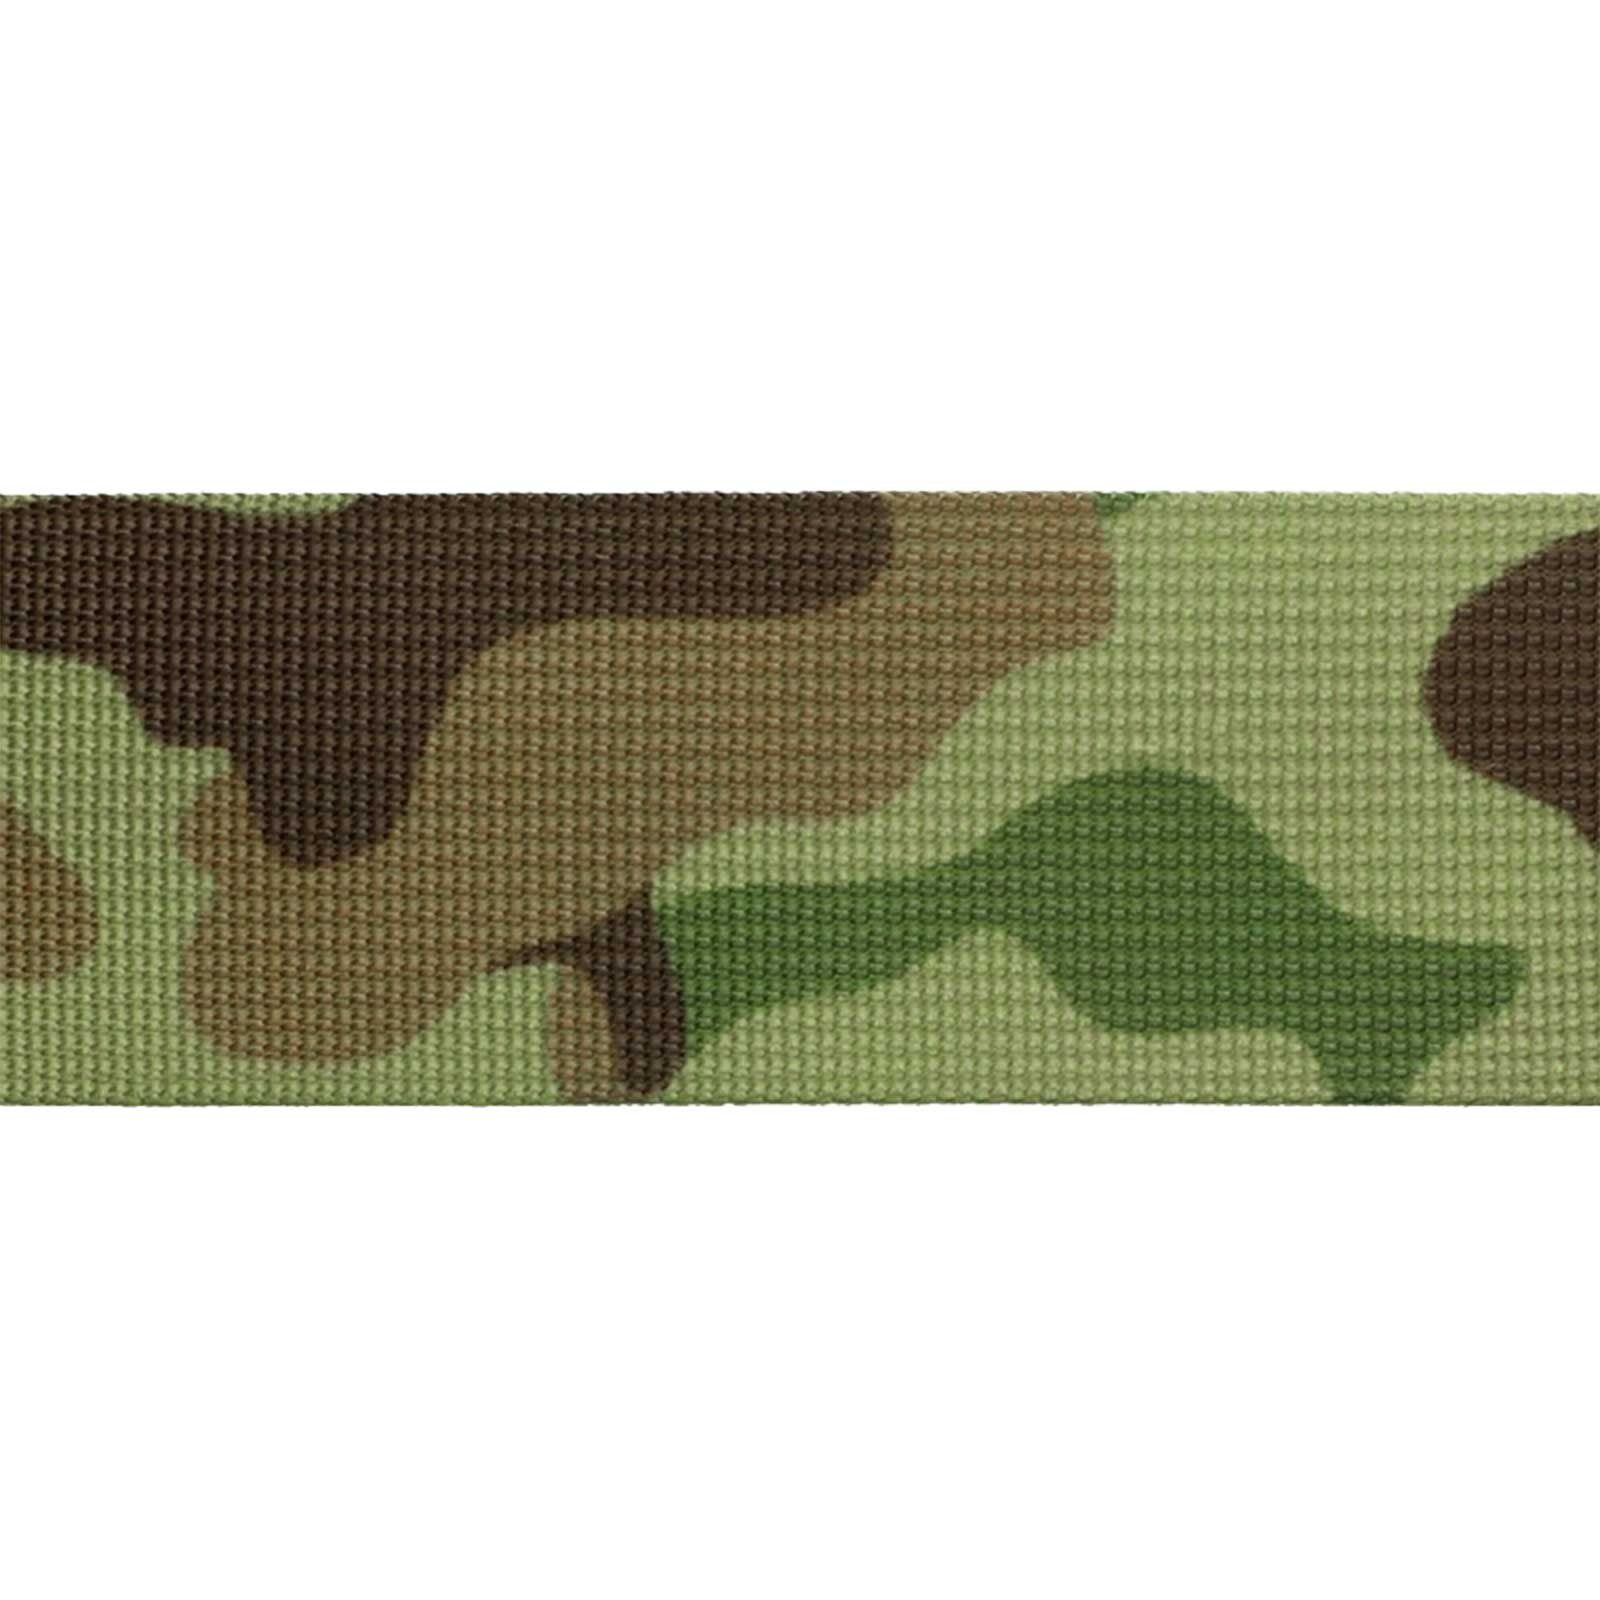 Gurtband Design maDDma Tarnmuster camouflage 50m im Rollladengurt,